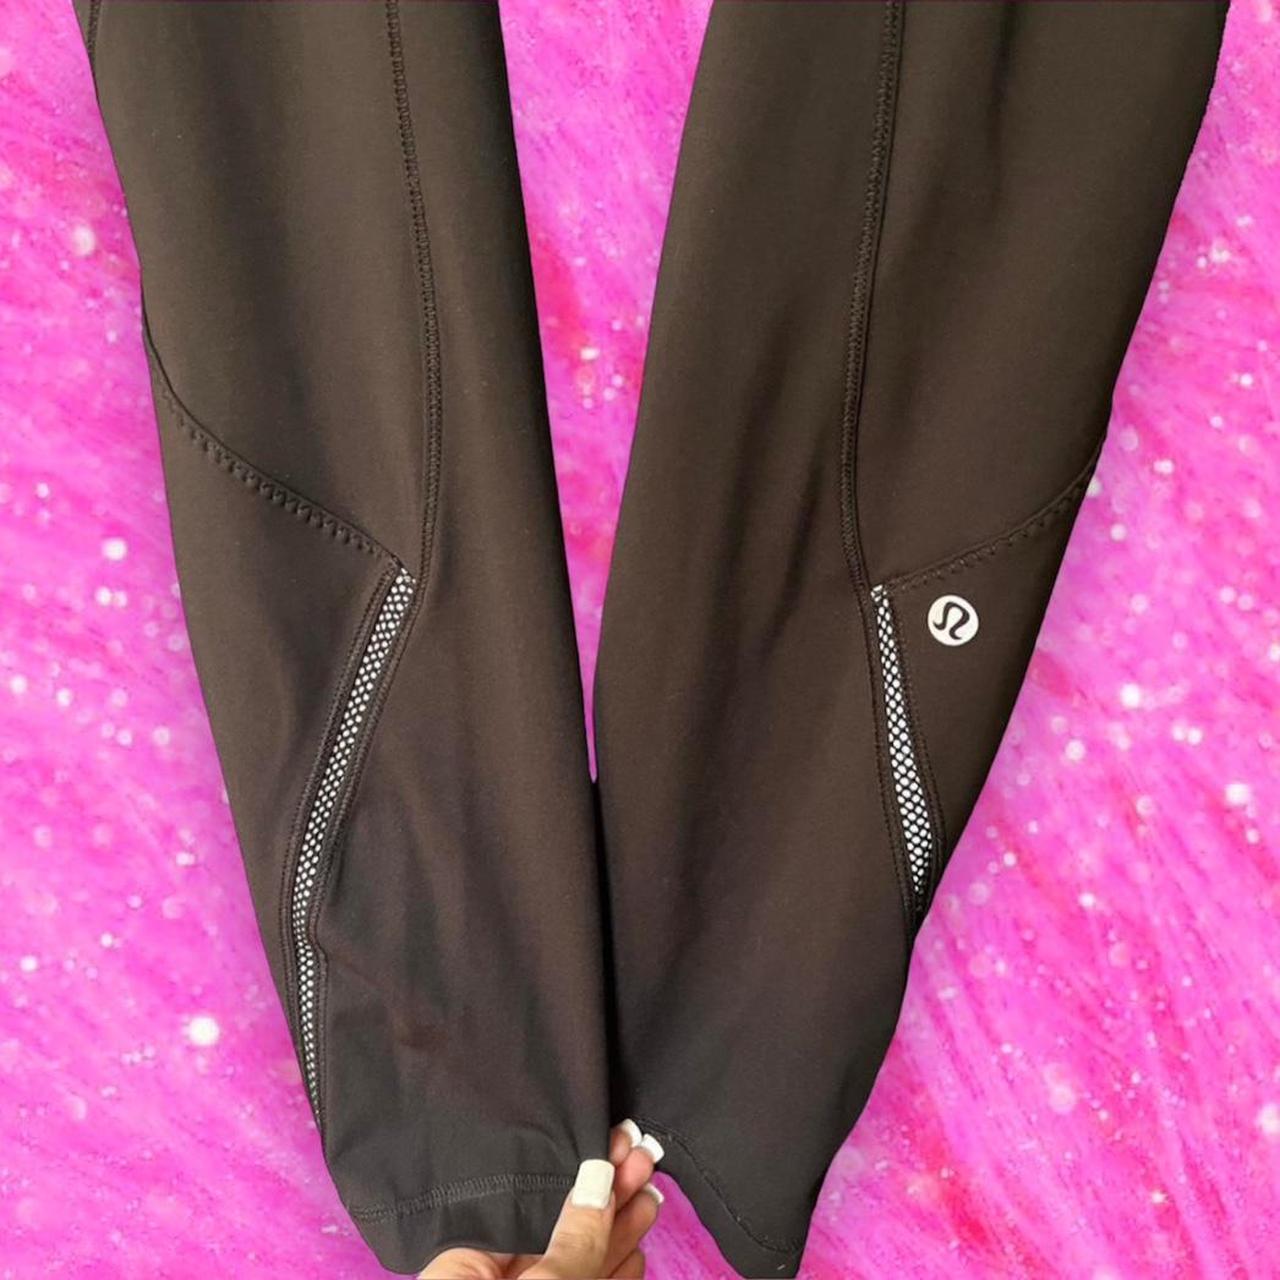 Lululemon leggings with side zipper pockets! These - Depop